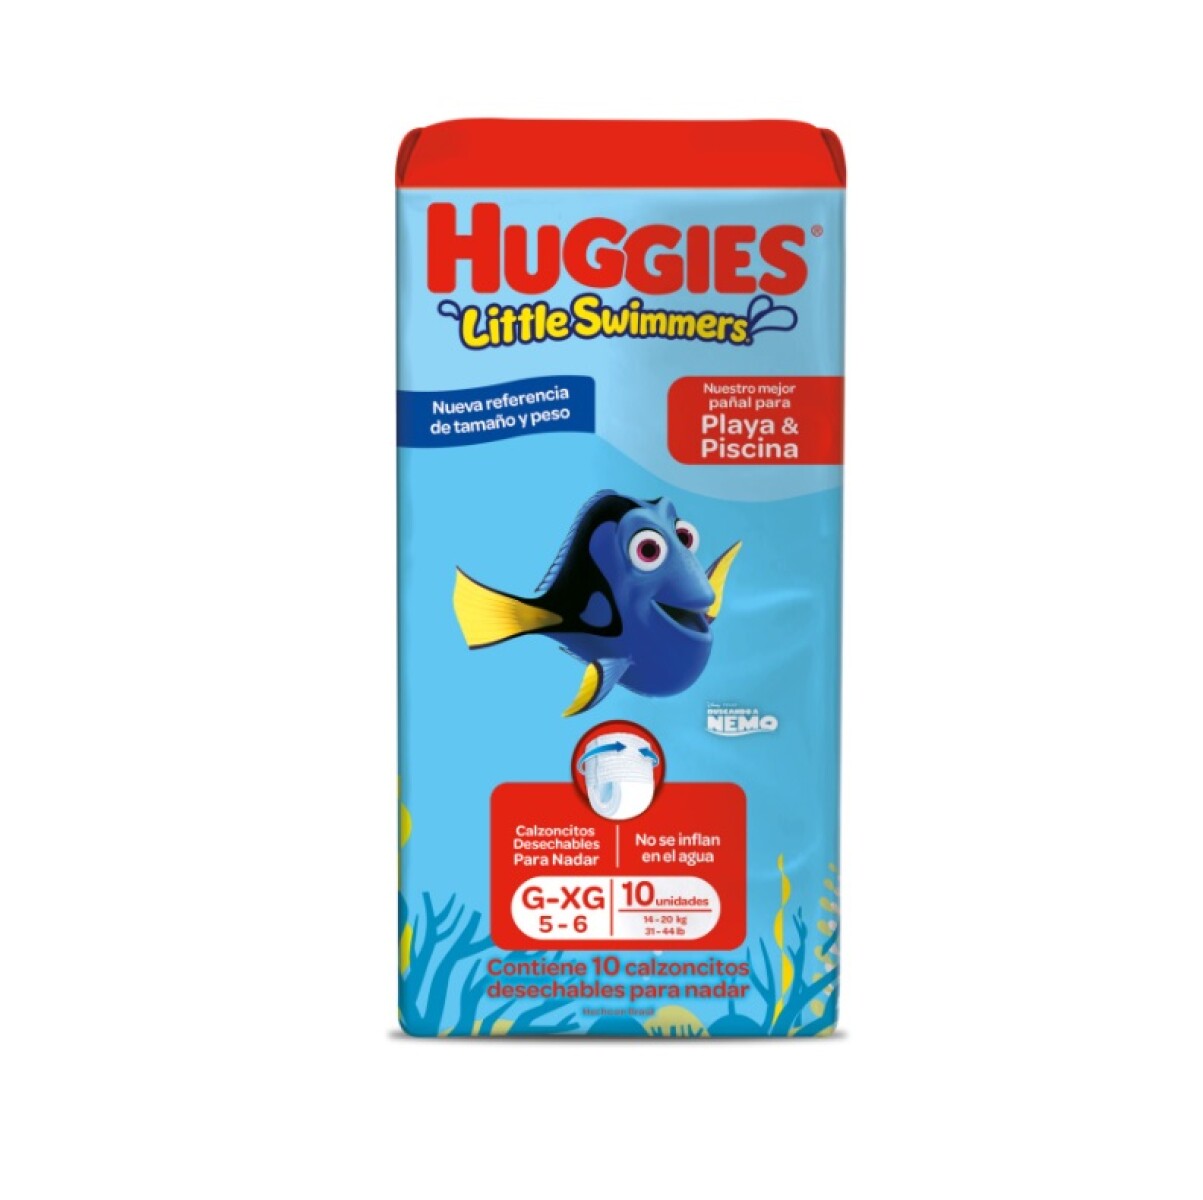 Pañales para el Agua Huggies G-xg Little Swimmers - 001 